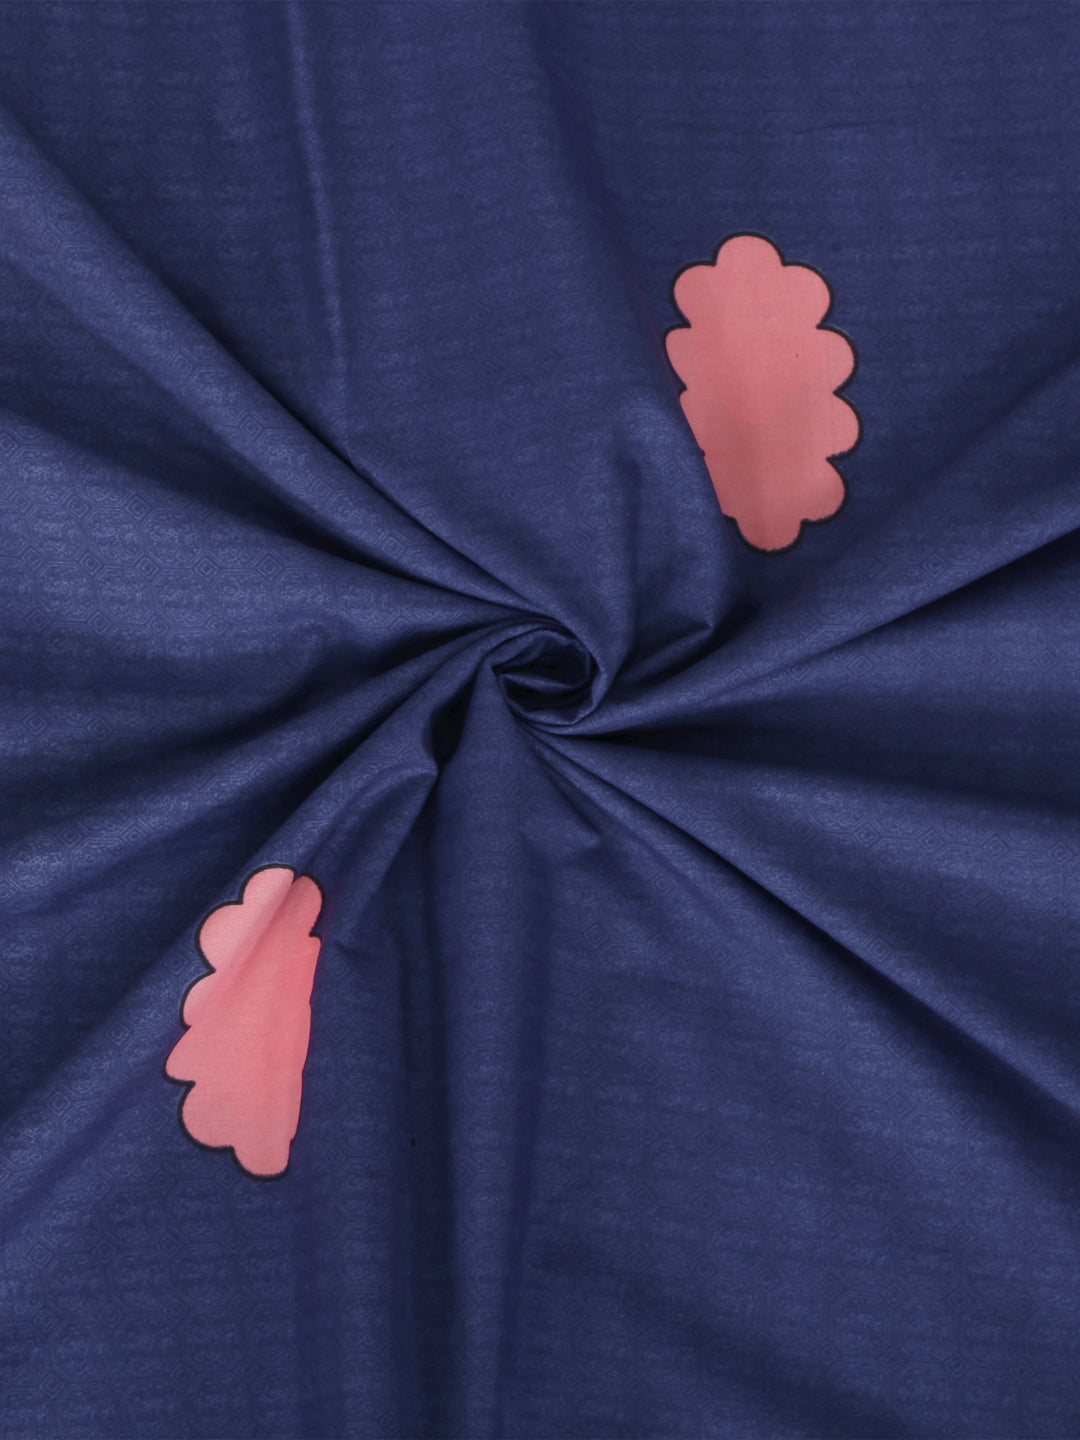 Arrabi Blue Cartoon TC Cotton Blend King Size Bookfold Bedsheet with 2 Pillow Covers (250 X 220 cm)